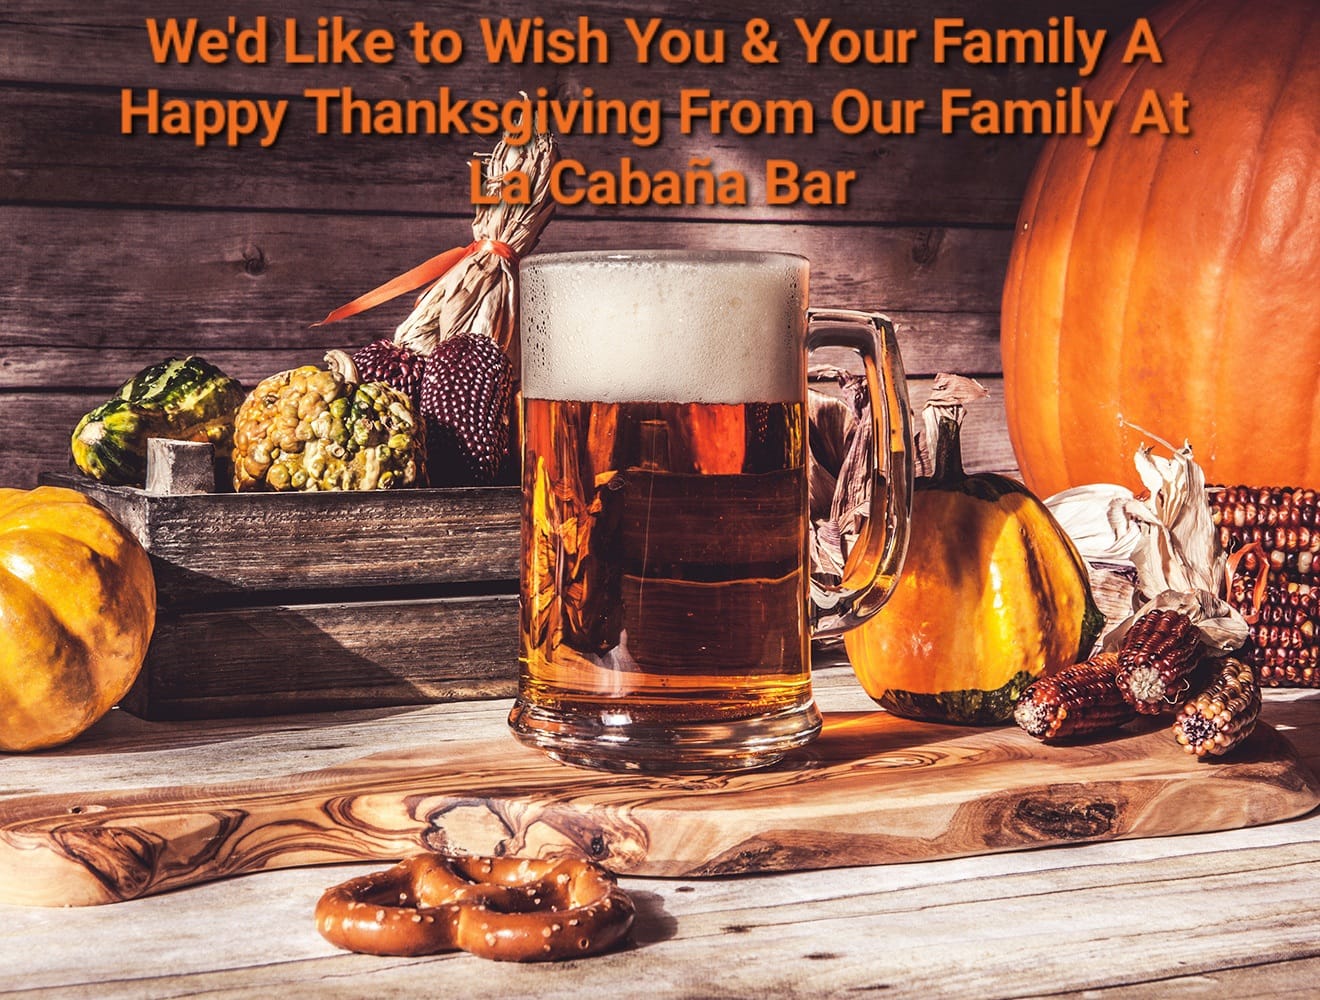 La Cabana Bar